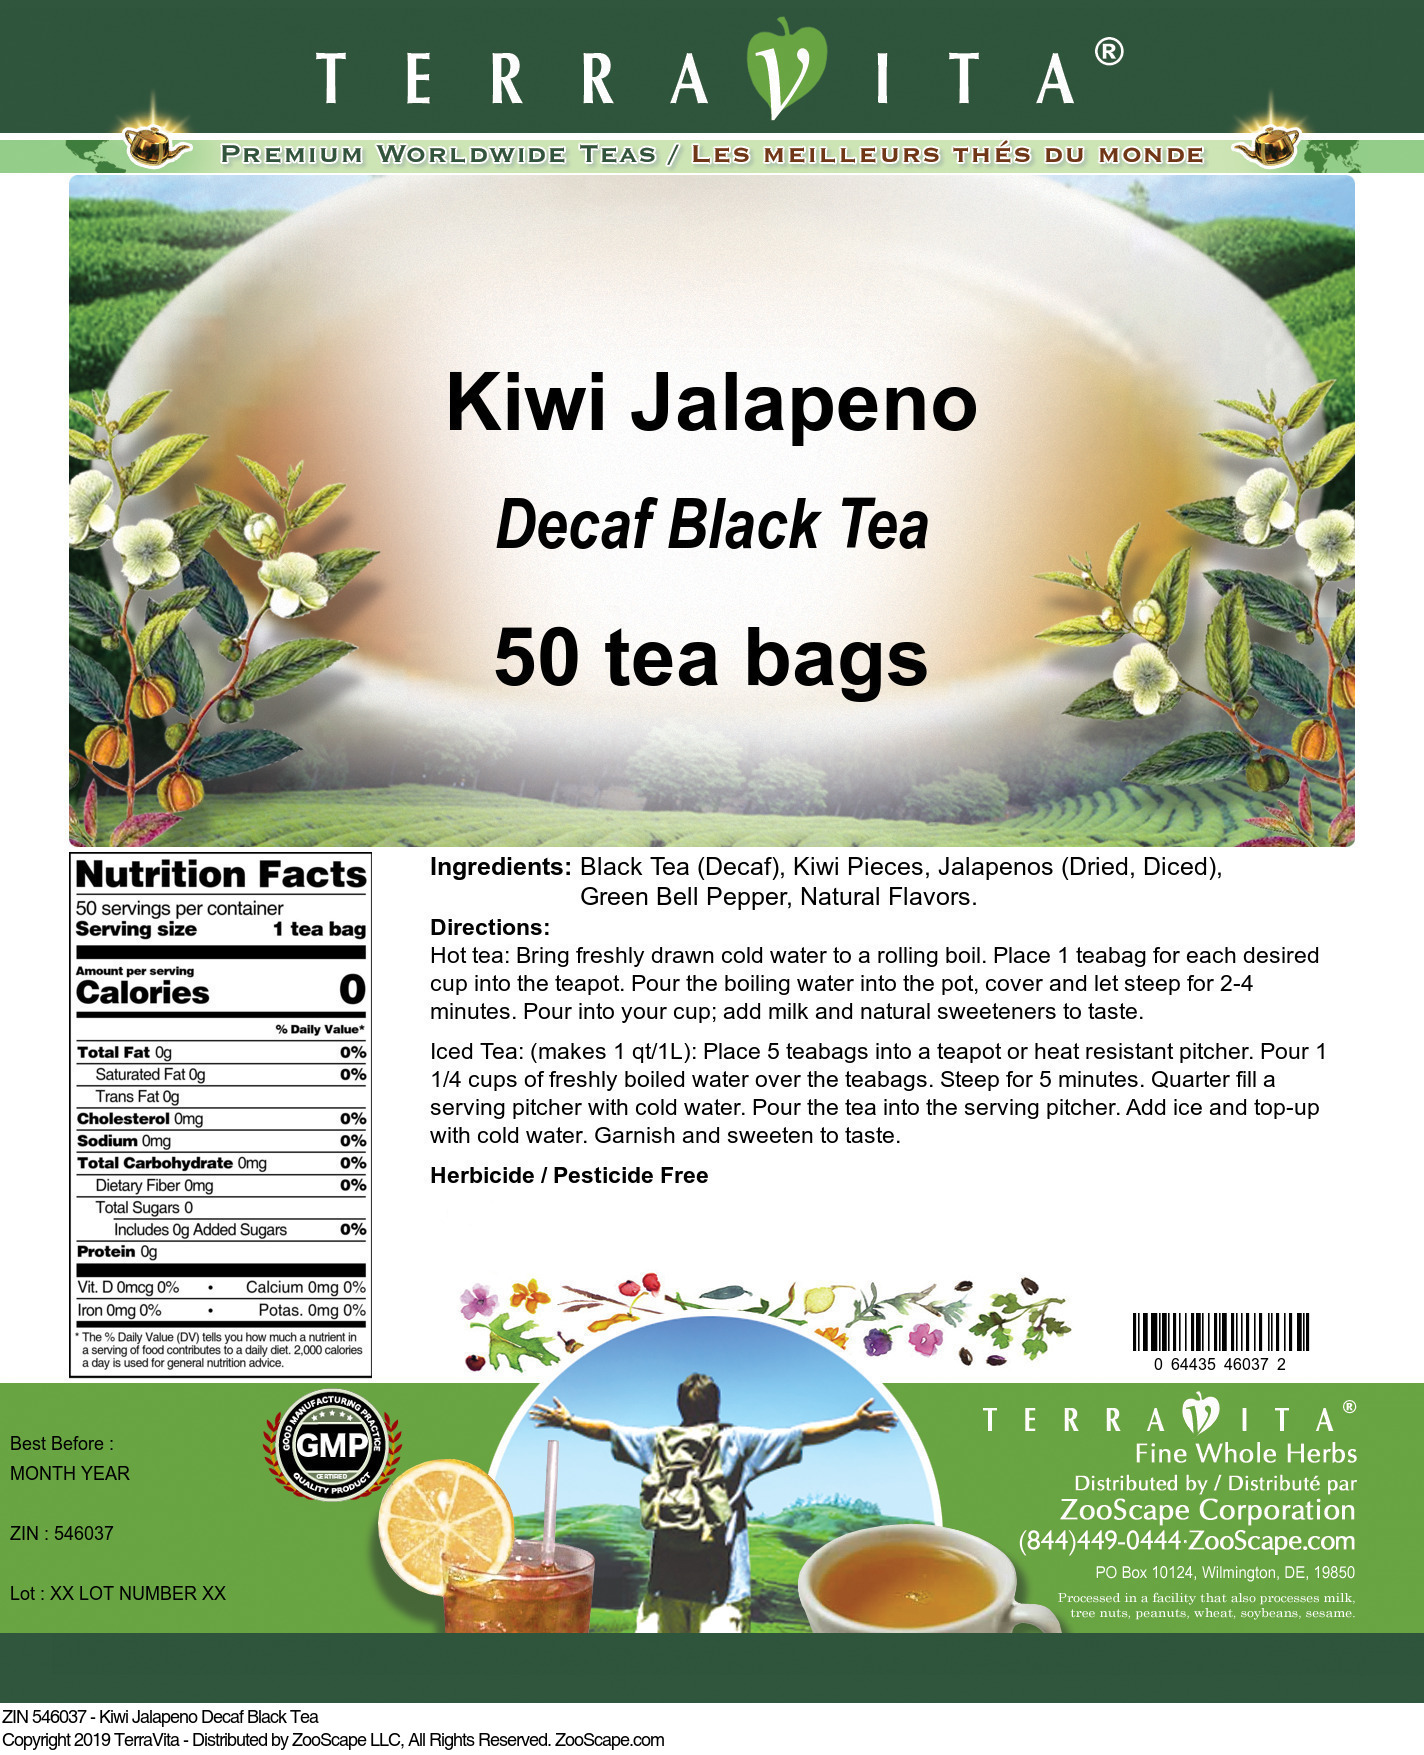 Kiwi Jalapeno Decaf Black Tea - Label